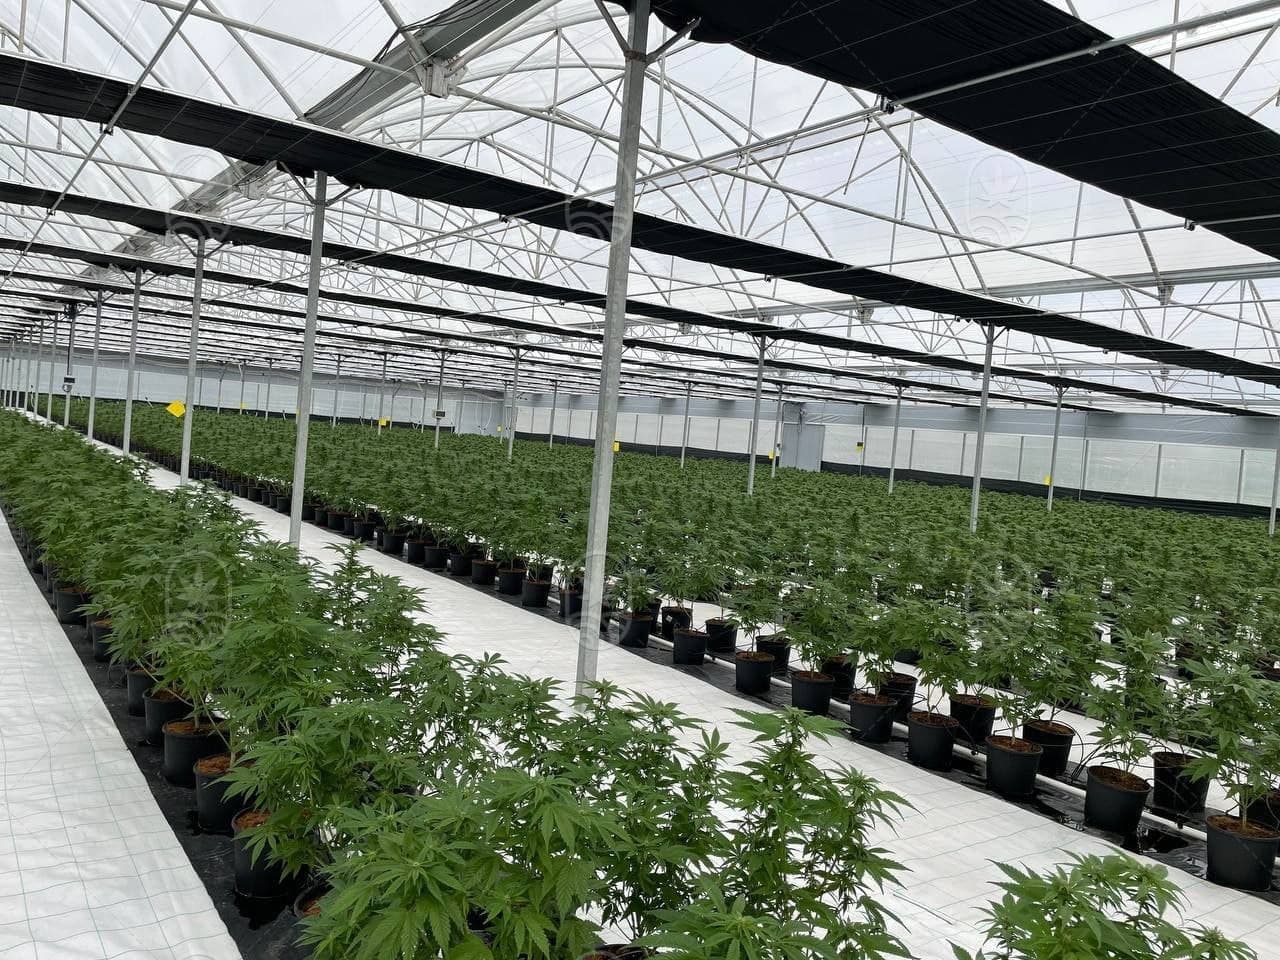 JuicyFields - あなたの大麻植物もここで育つことができます